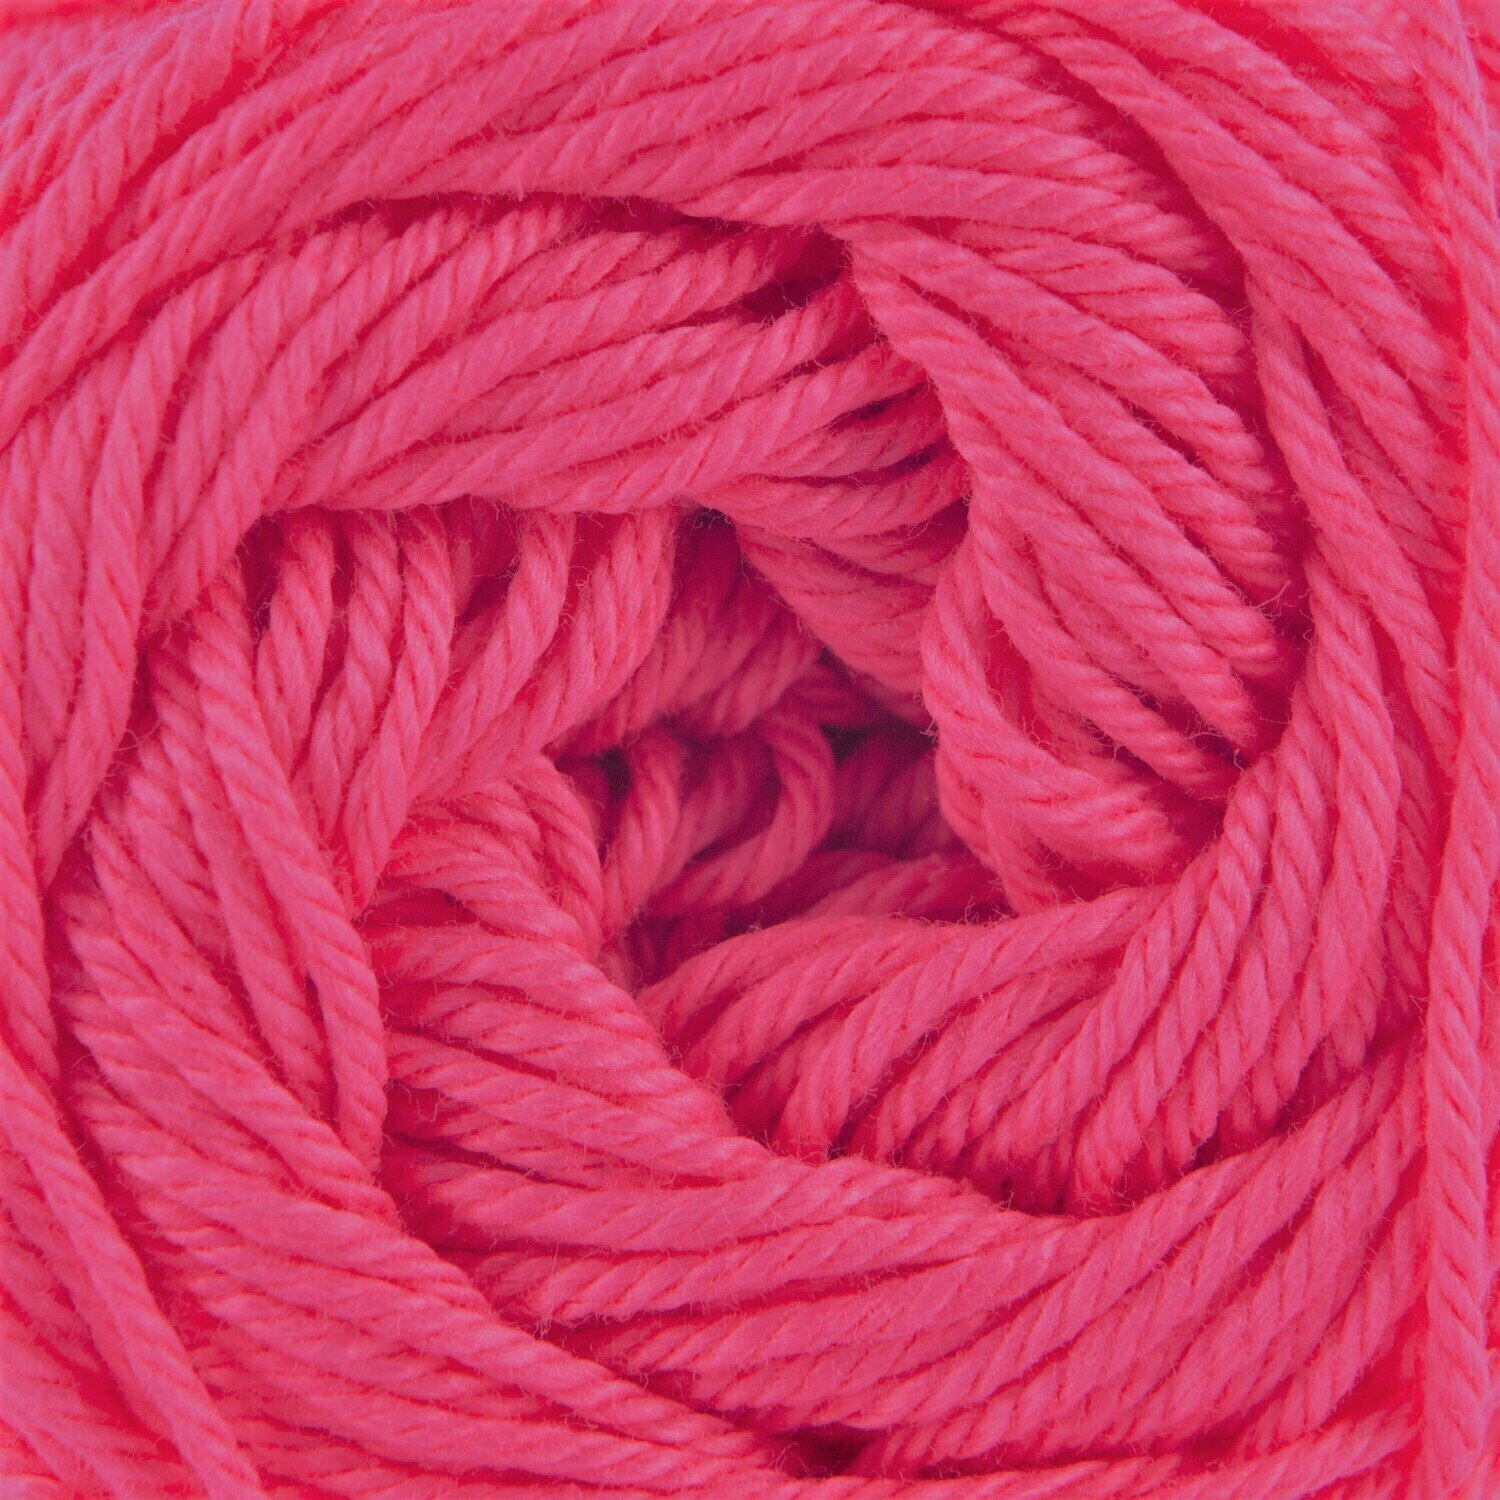 Knitting Yarn Nitarna Ceska Trebova Silva 3334 Neon Pink